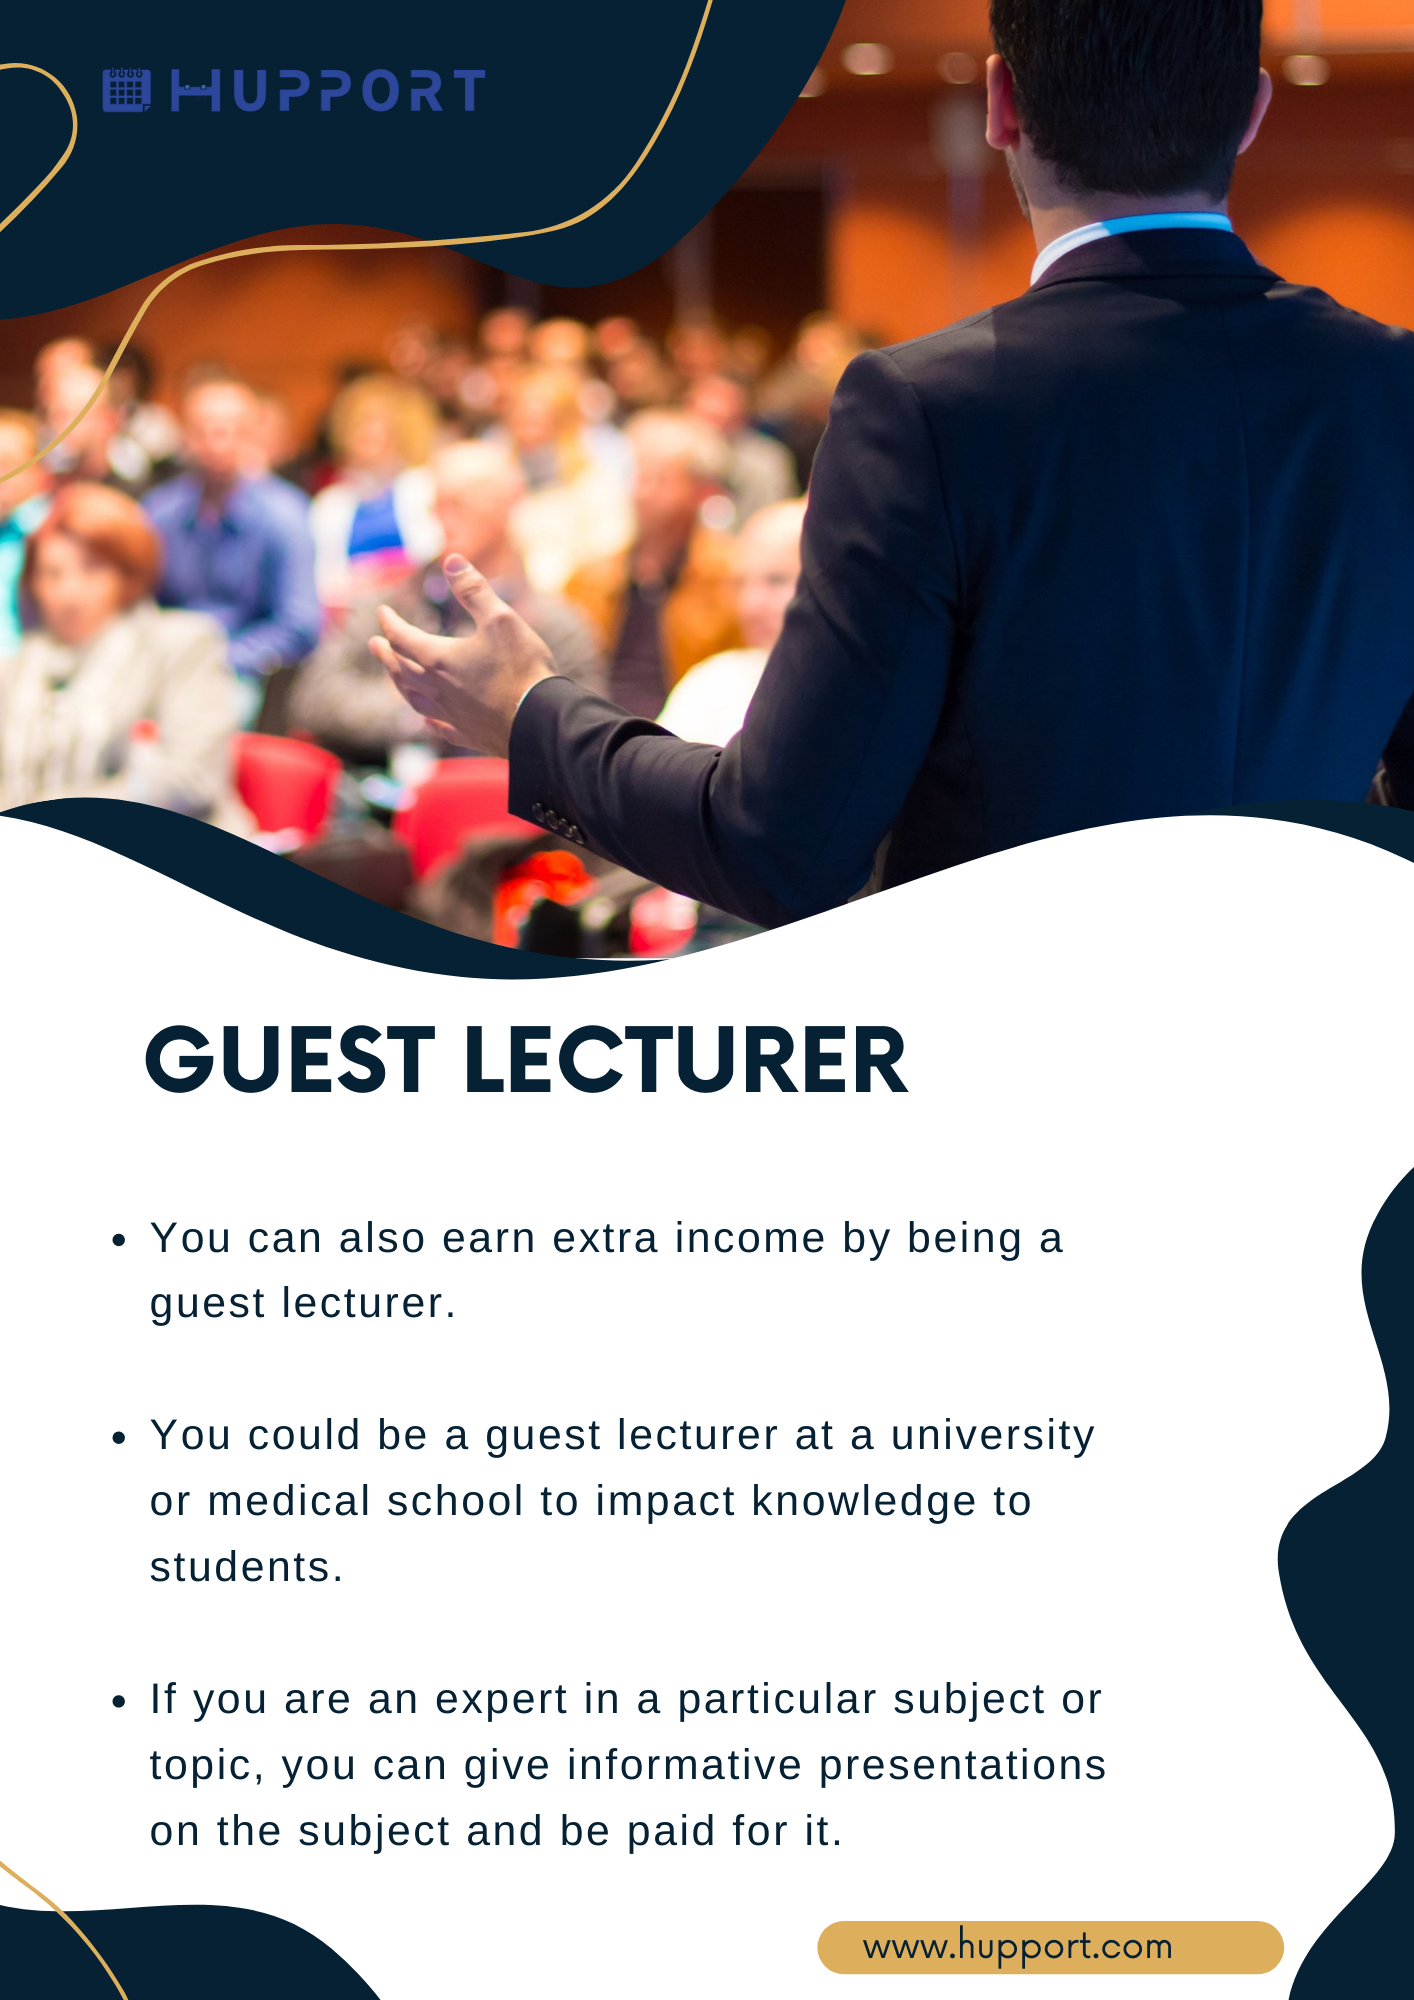 Guest lecturer